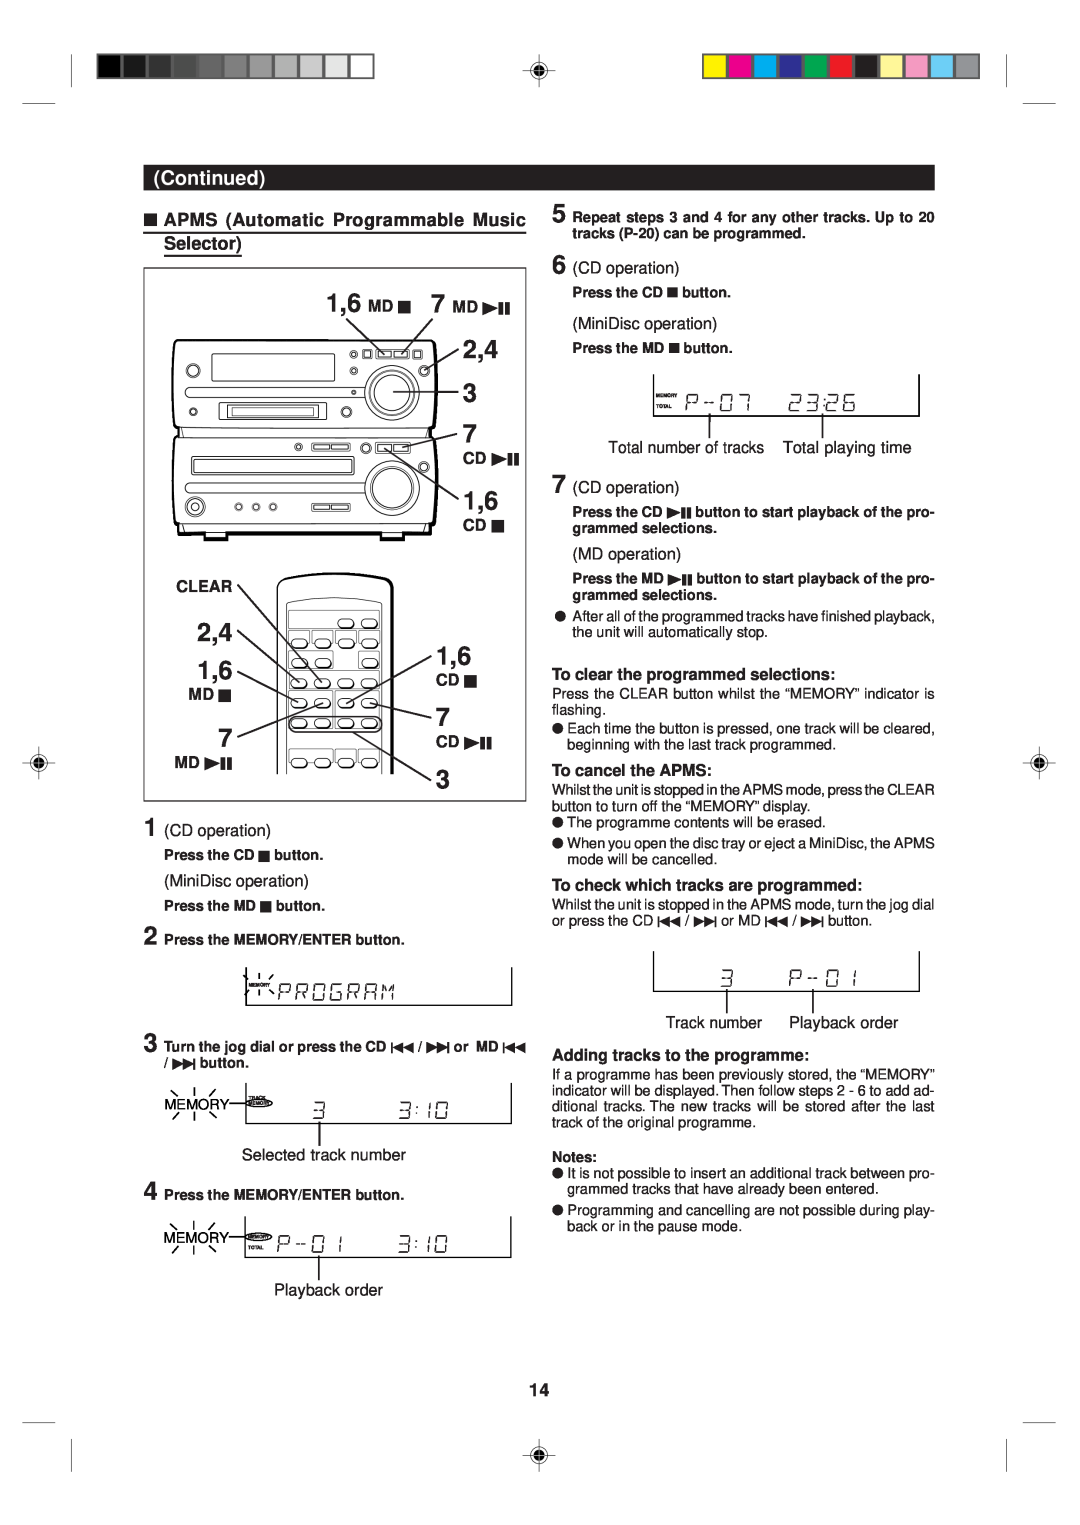 Sharp MD-MX10H operation manual 1,6 MD H 